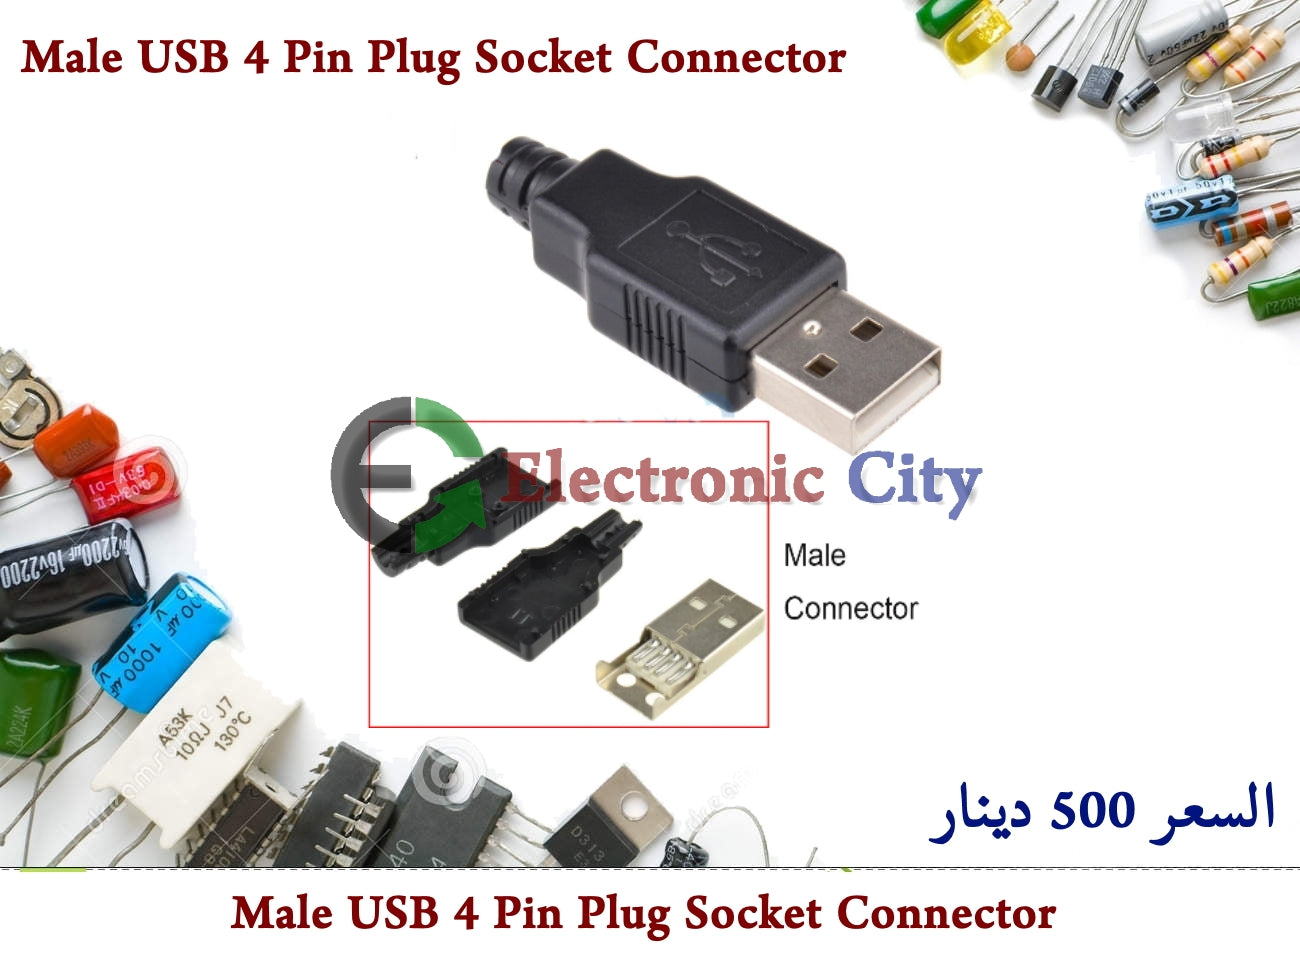 USB 2.0 Type A Male USB 4 Pin Plug Socket Connector